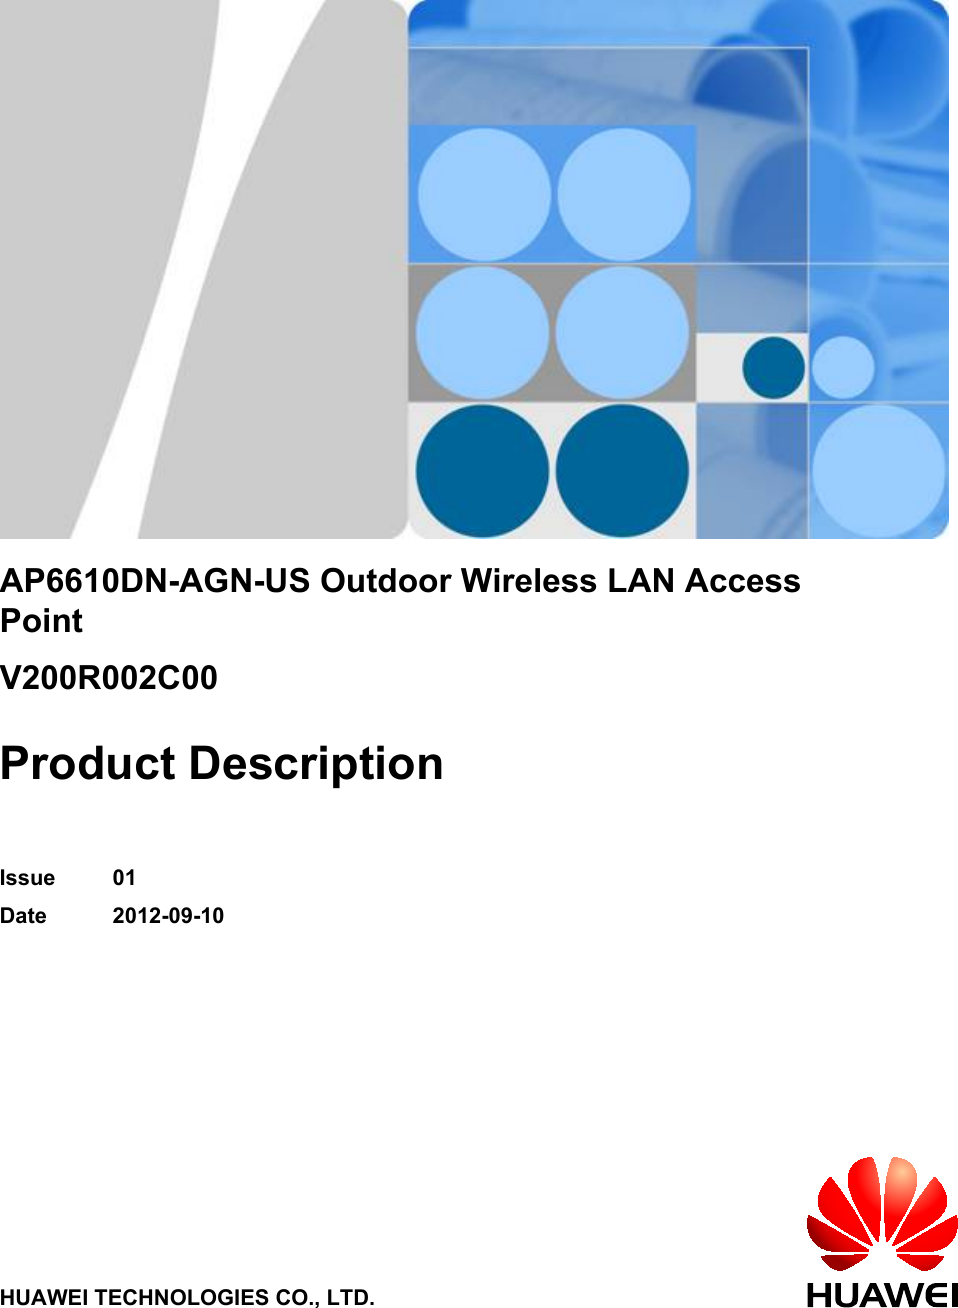 AP6610DN-AGN-US Outdoor Wireless LAN AccessPointV200R002C00Product DescriptionIssue 01Date 2012-09-10HUAWEI TECHNOLOGIES CO., LTD.